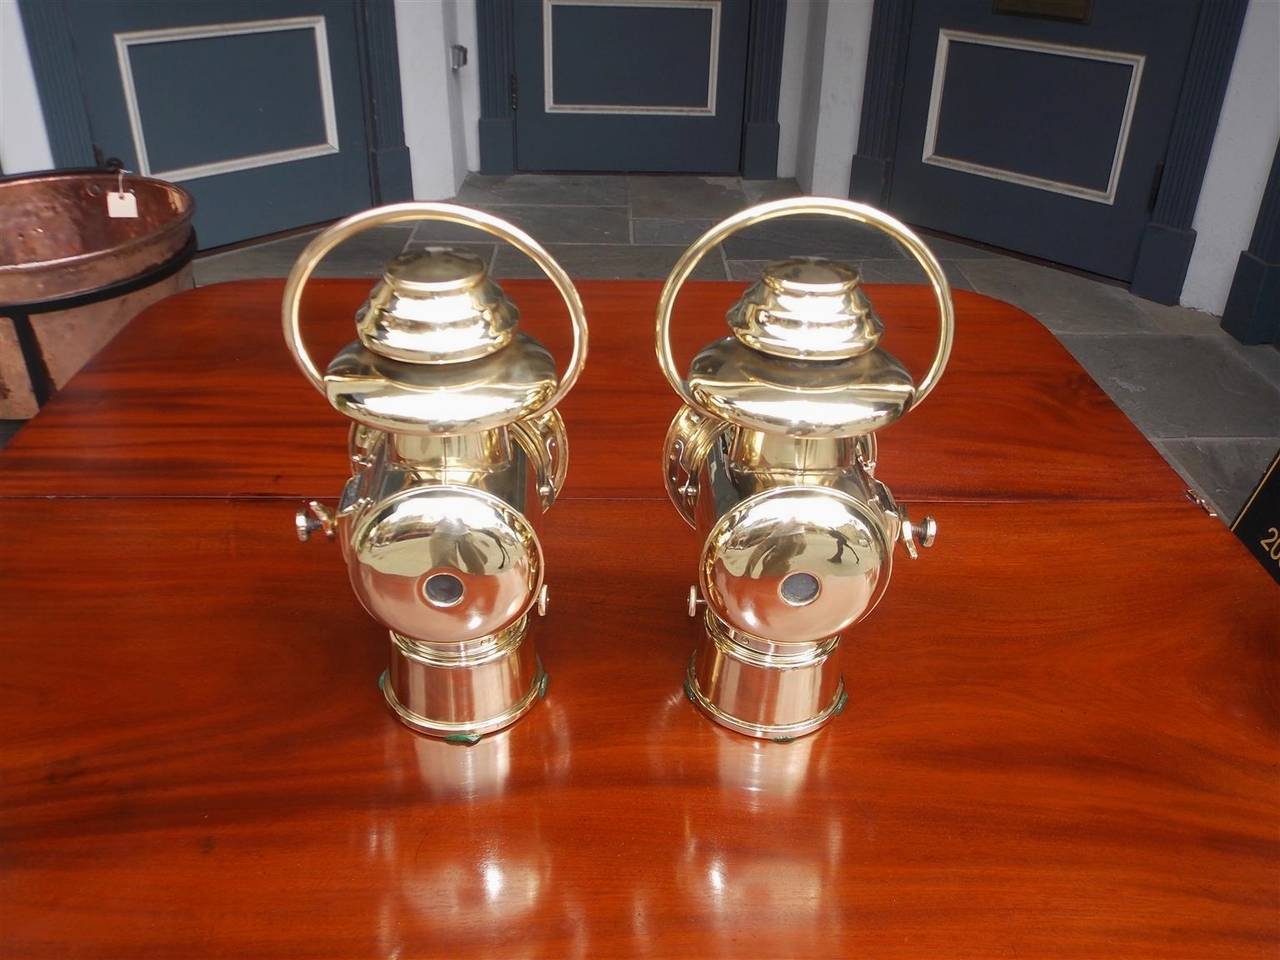 20th Century Pair of American Brass Carriage Lanterns, Circa 1900